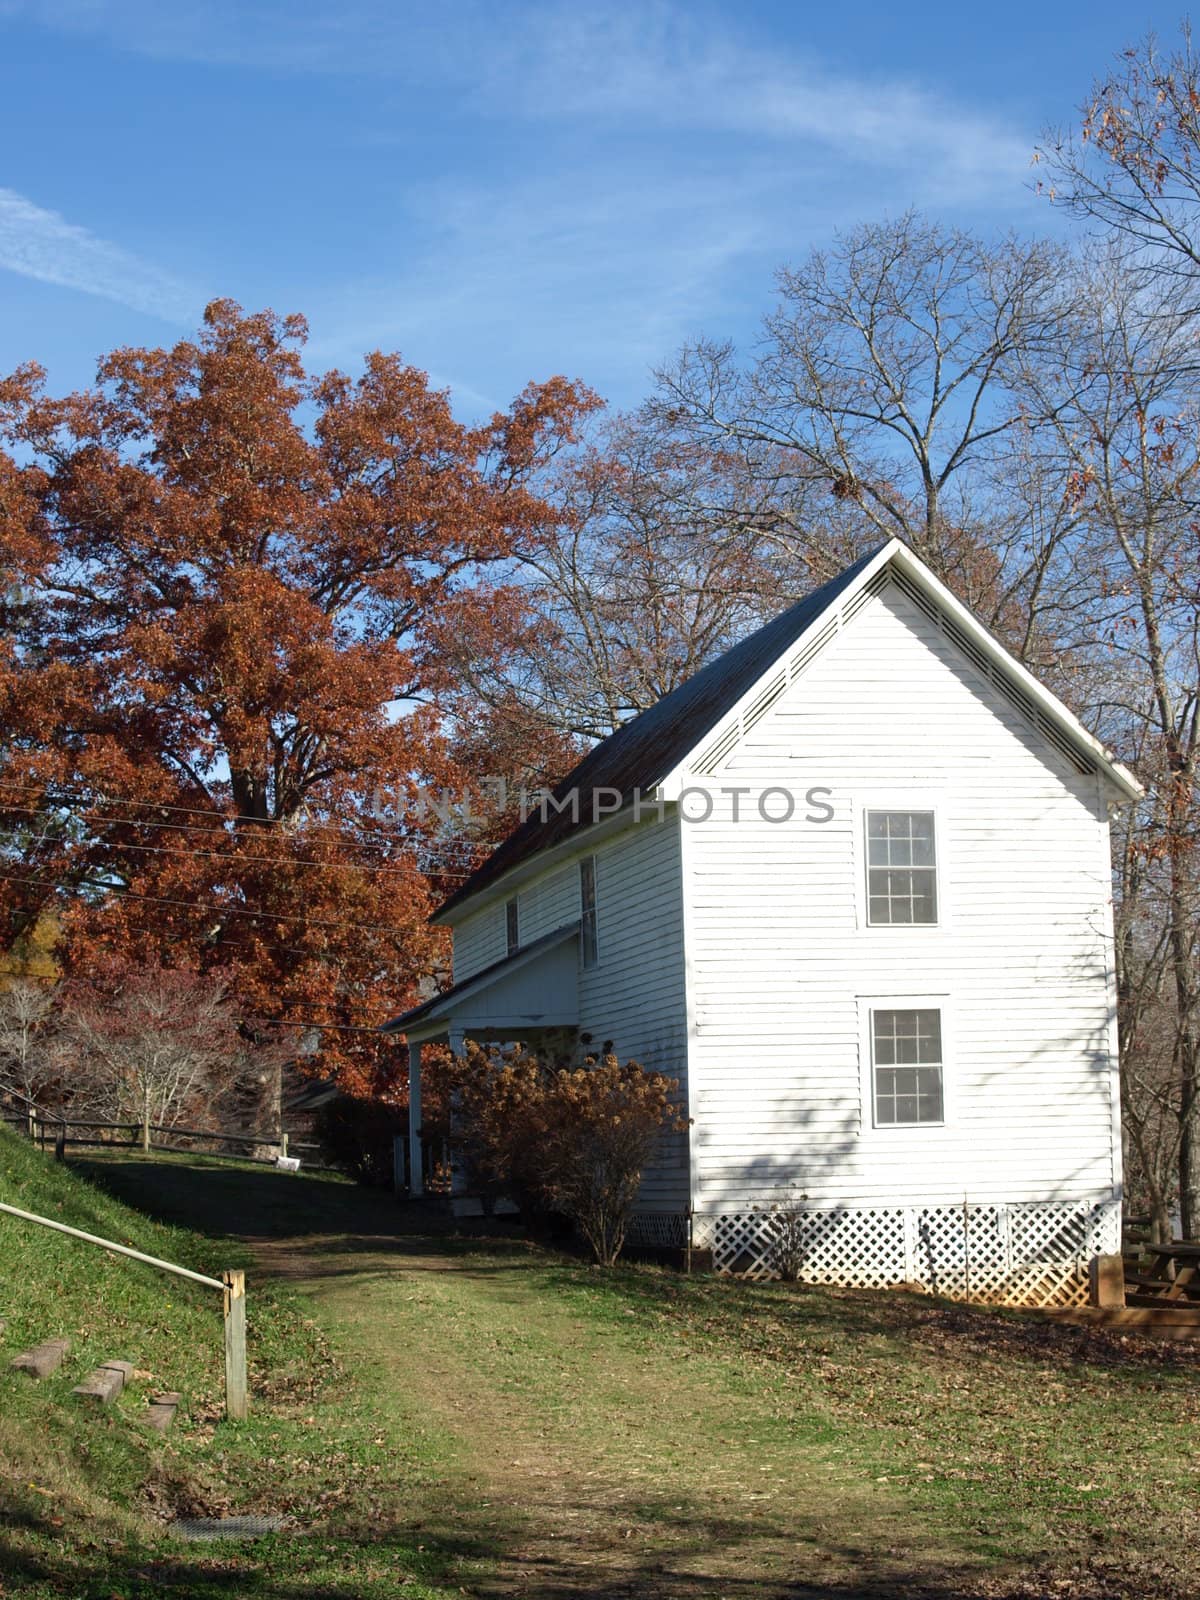 old farm house in rural north carolina